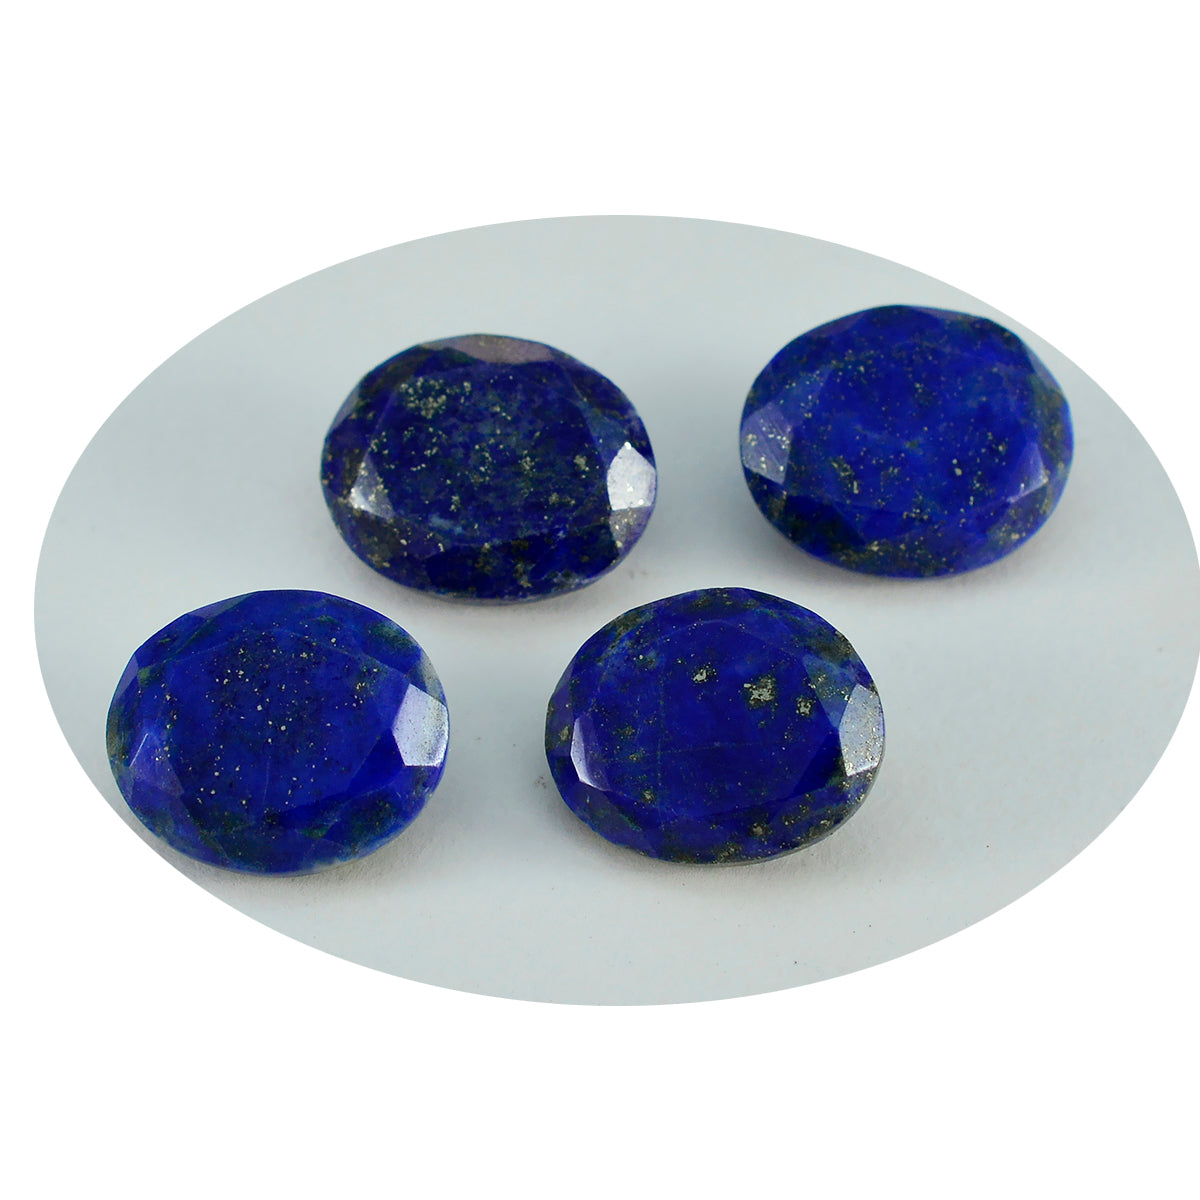 Riyogems 1PC Natuurlijke Blauwe Lapis Lazuli Facet 10x14 mm Ovale Vorm mooie Kwaliteit Losse Edelsteen